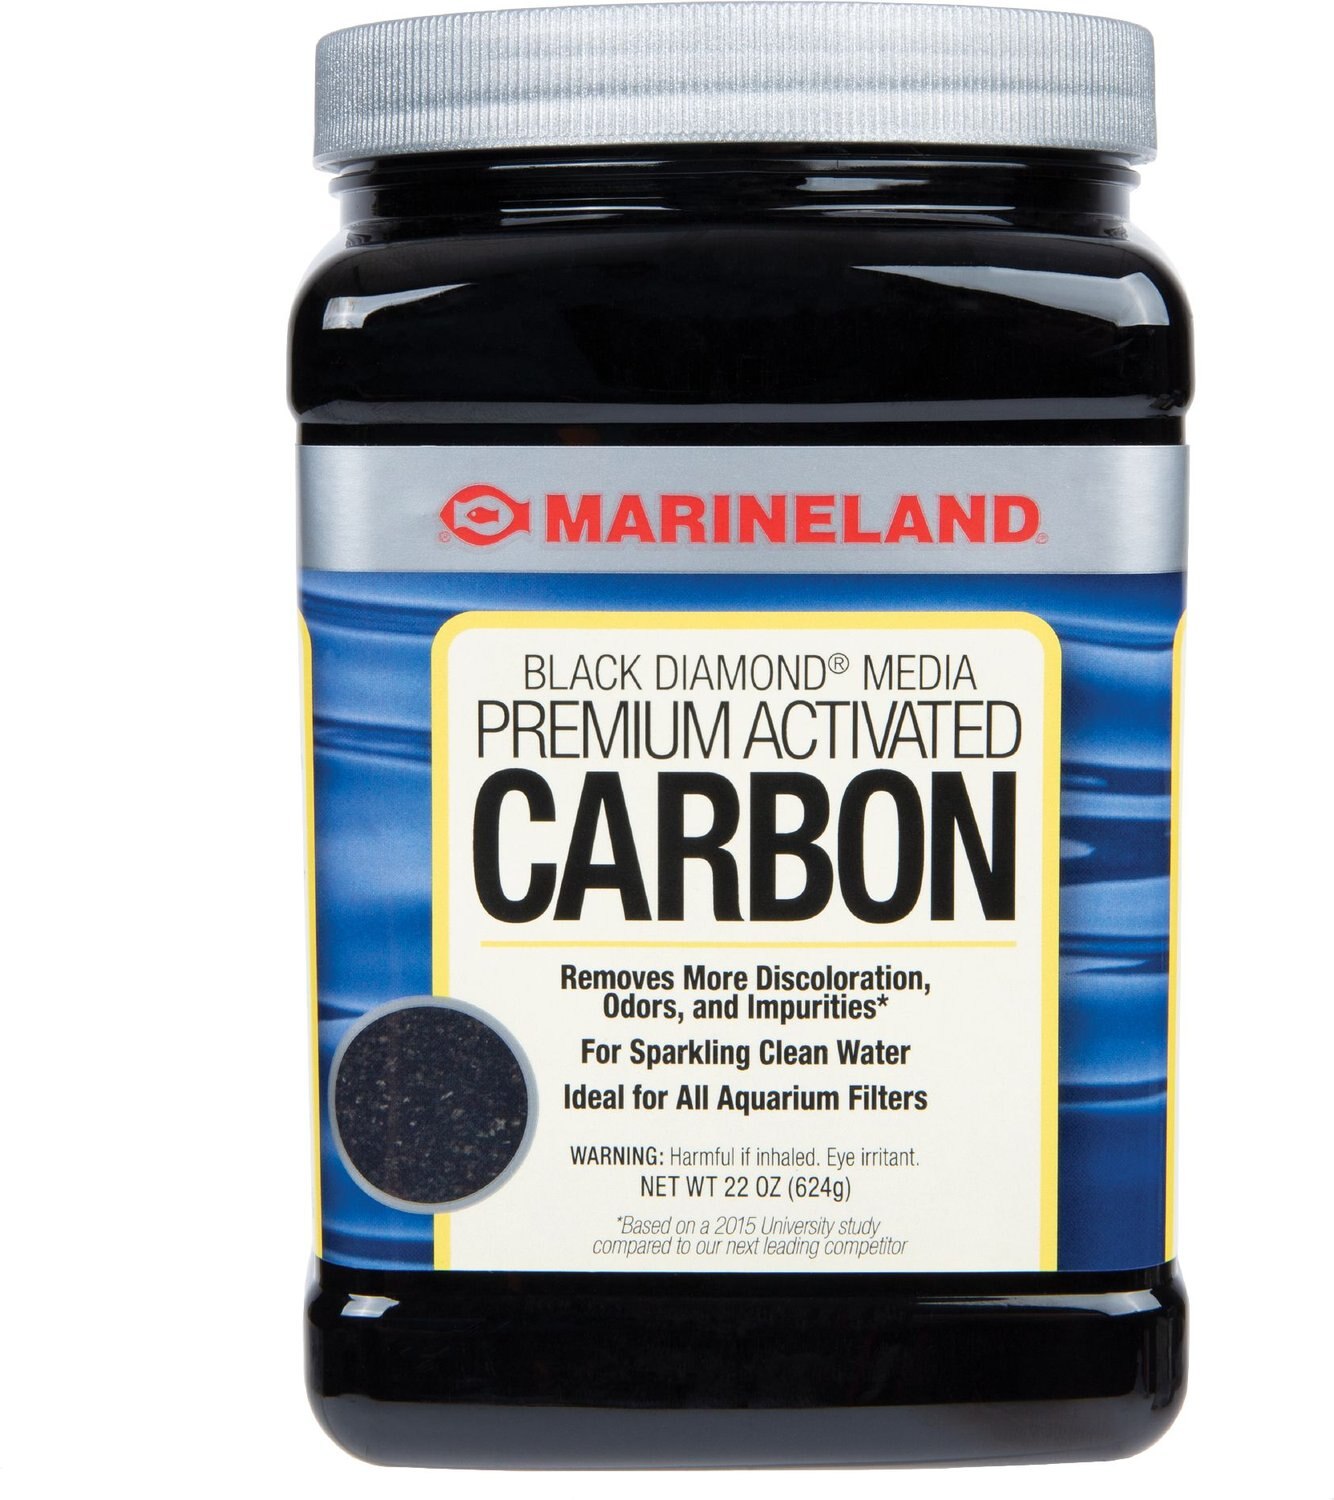 Marineland Black Diamond Activated Carbon Filter Media, 22-oz jar